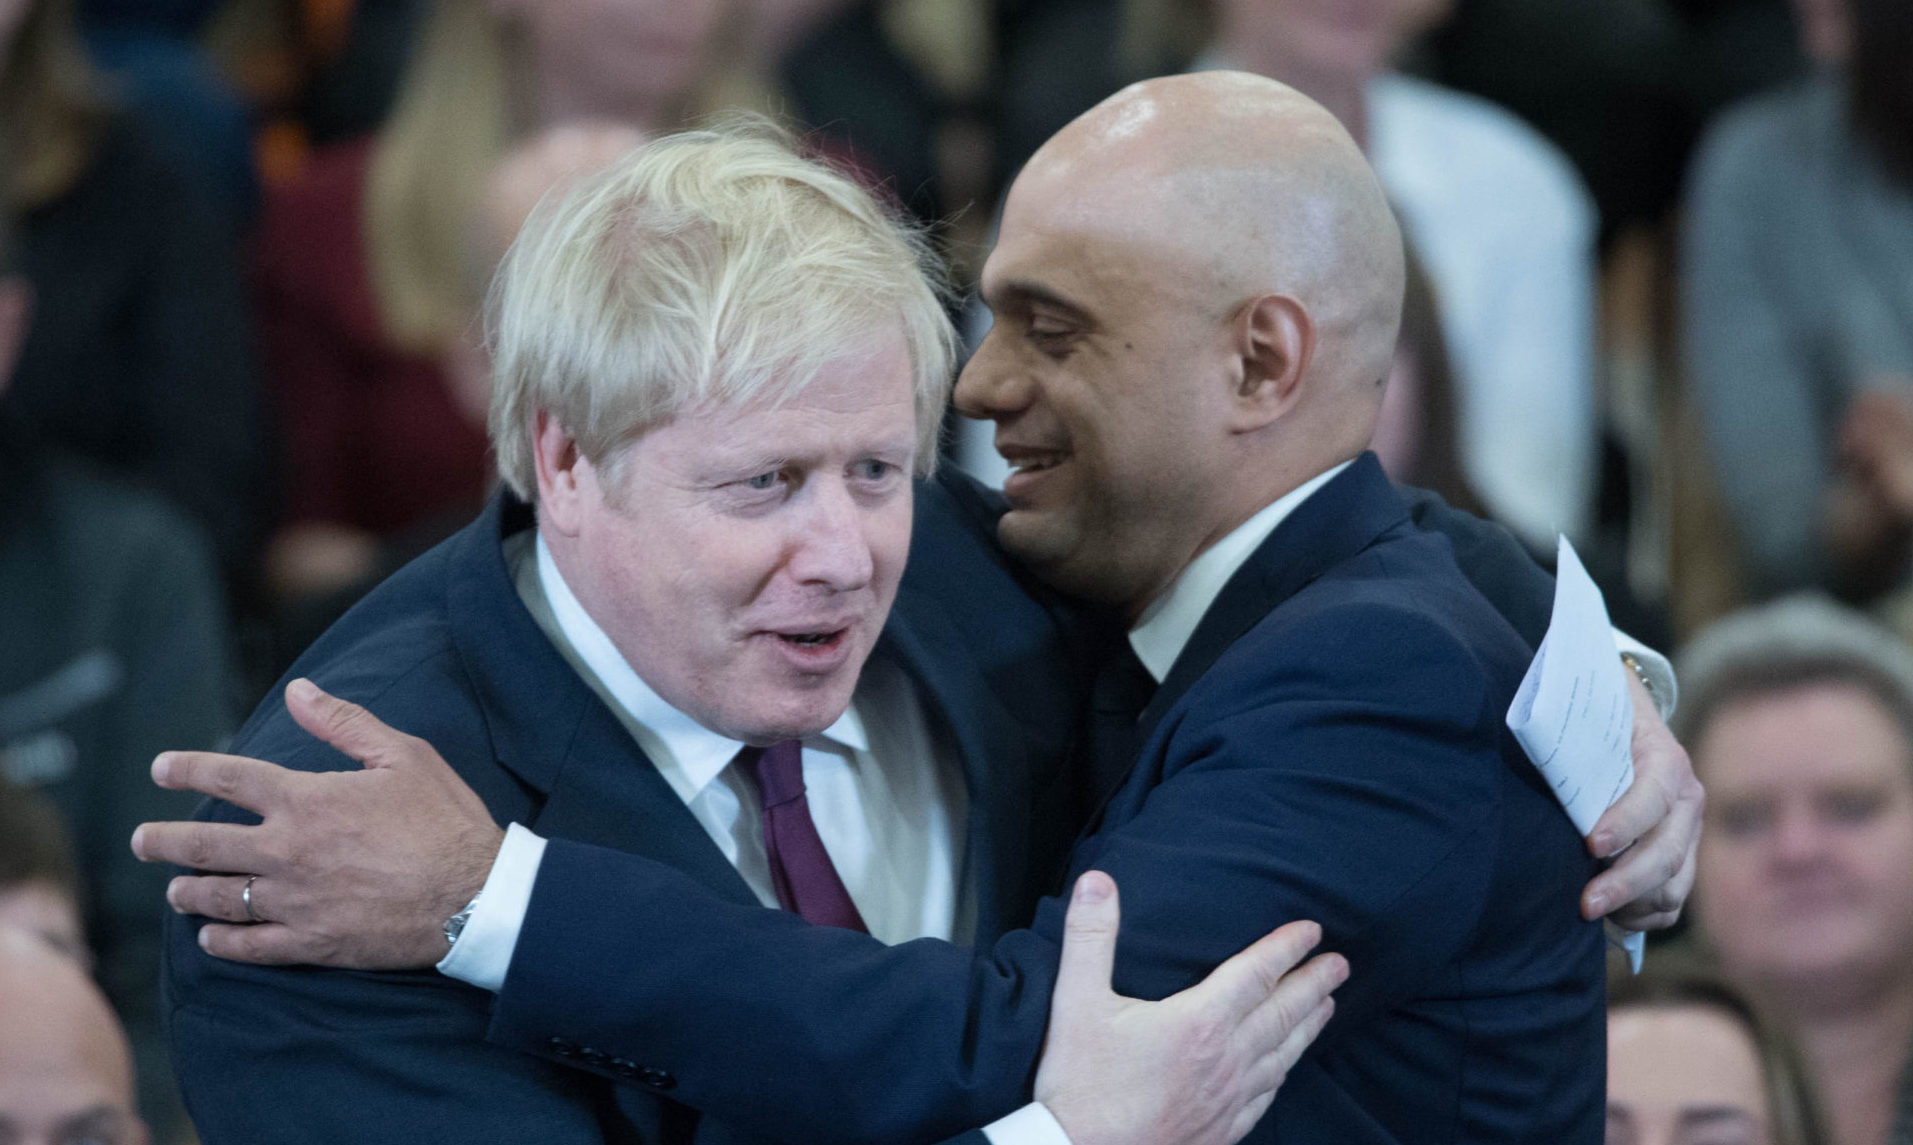 Prime Minister Boris Johnson and Chancellor Sajid Javid in happier times